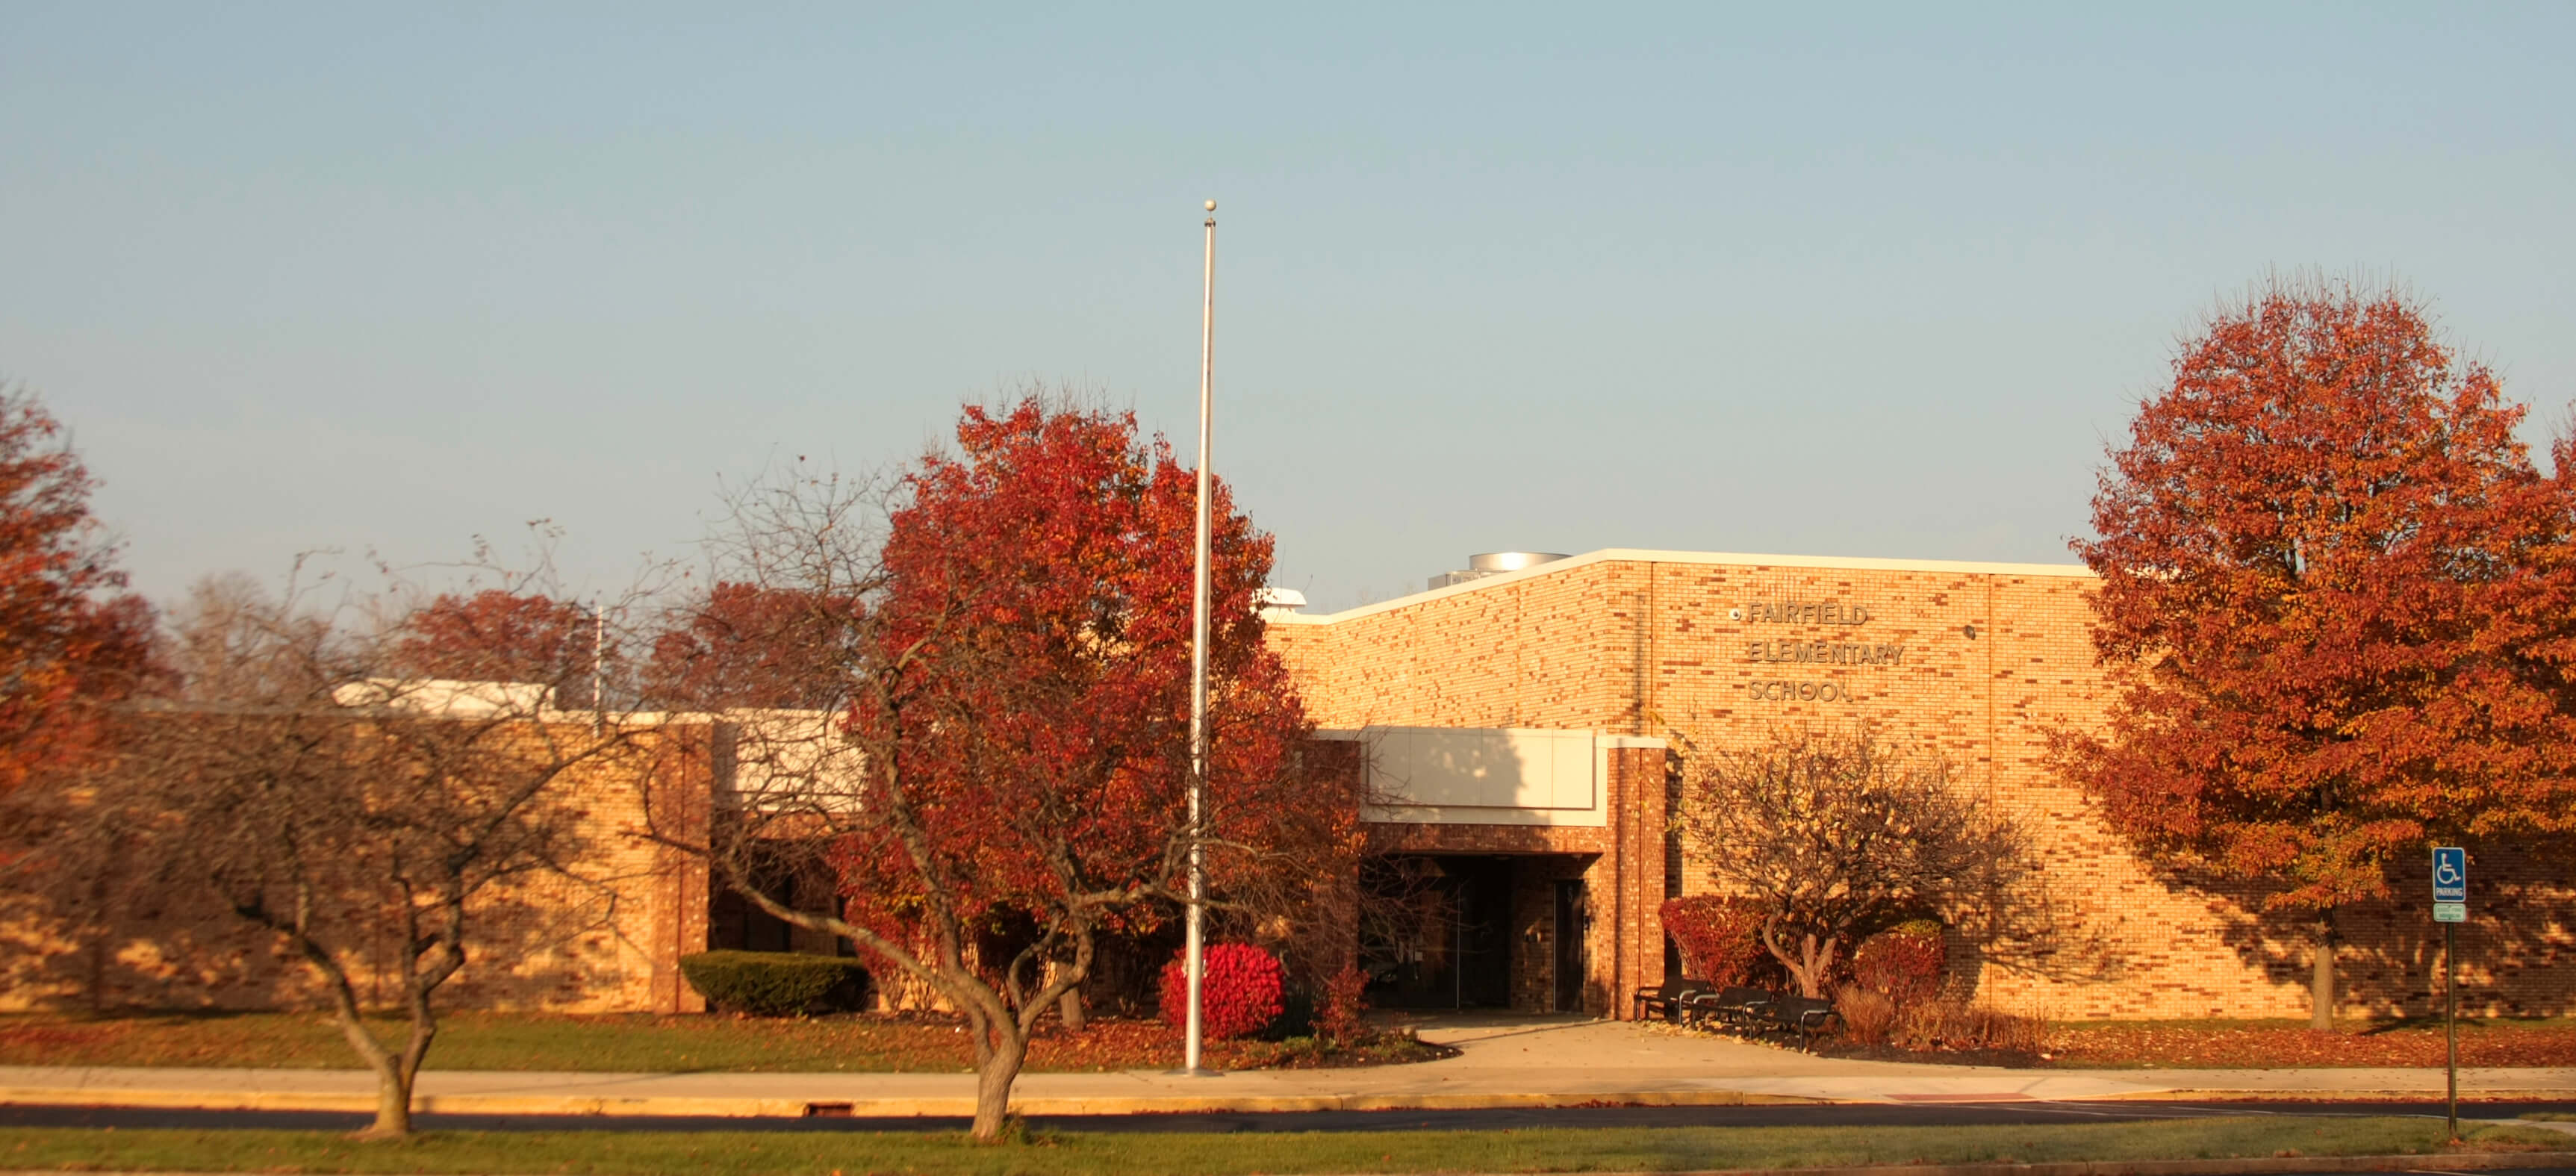 Fairfield Elementary School exterior